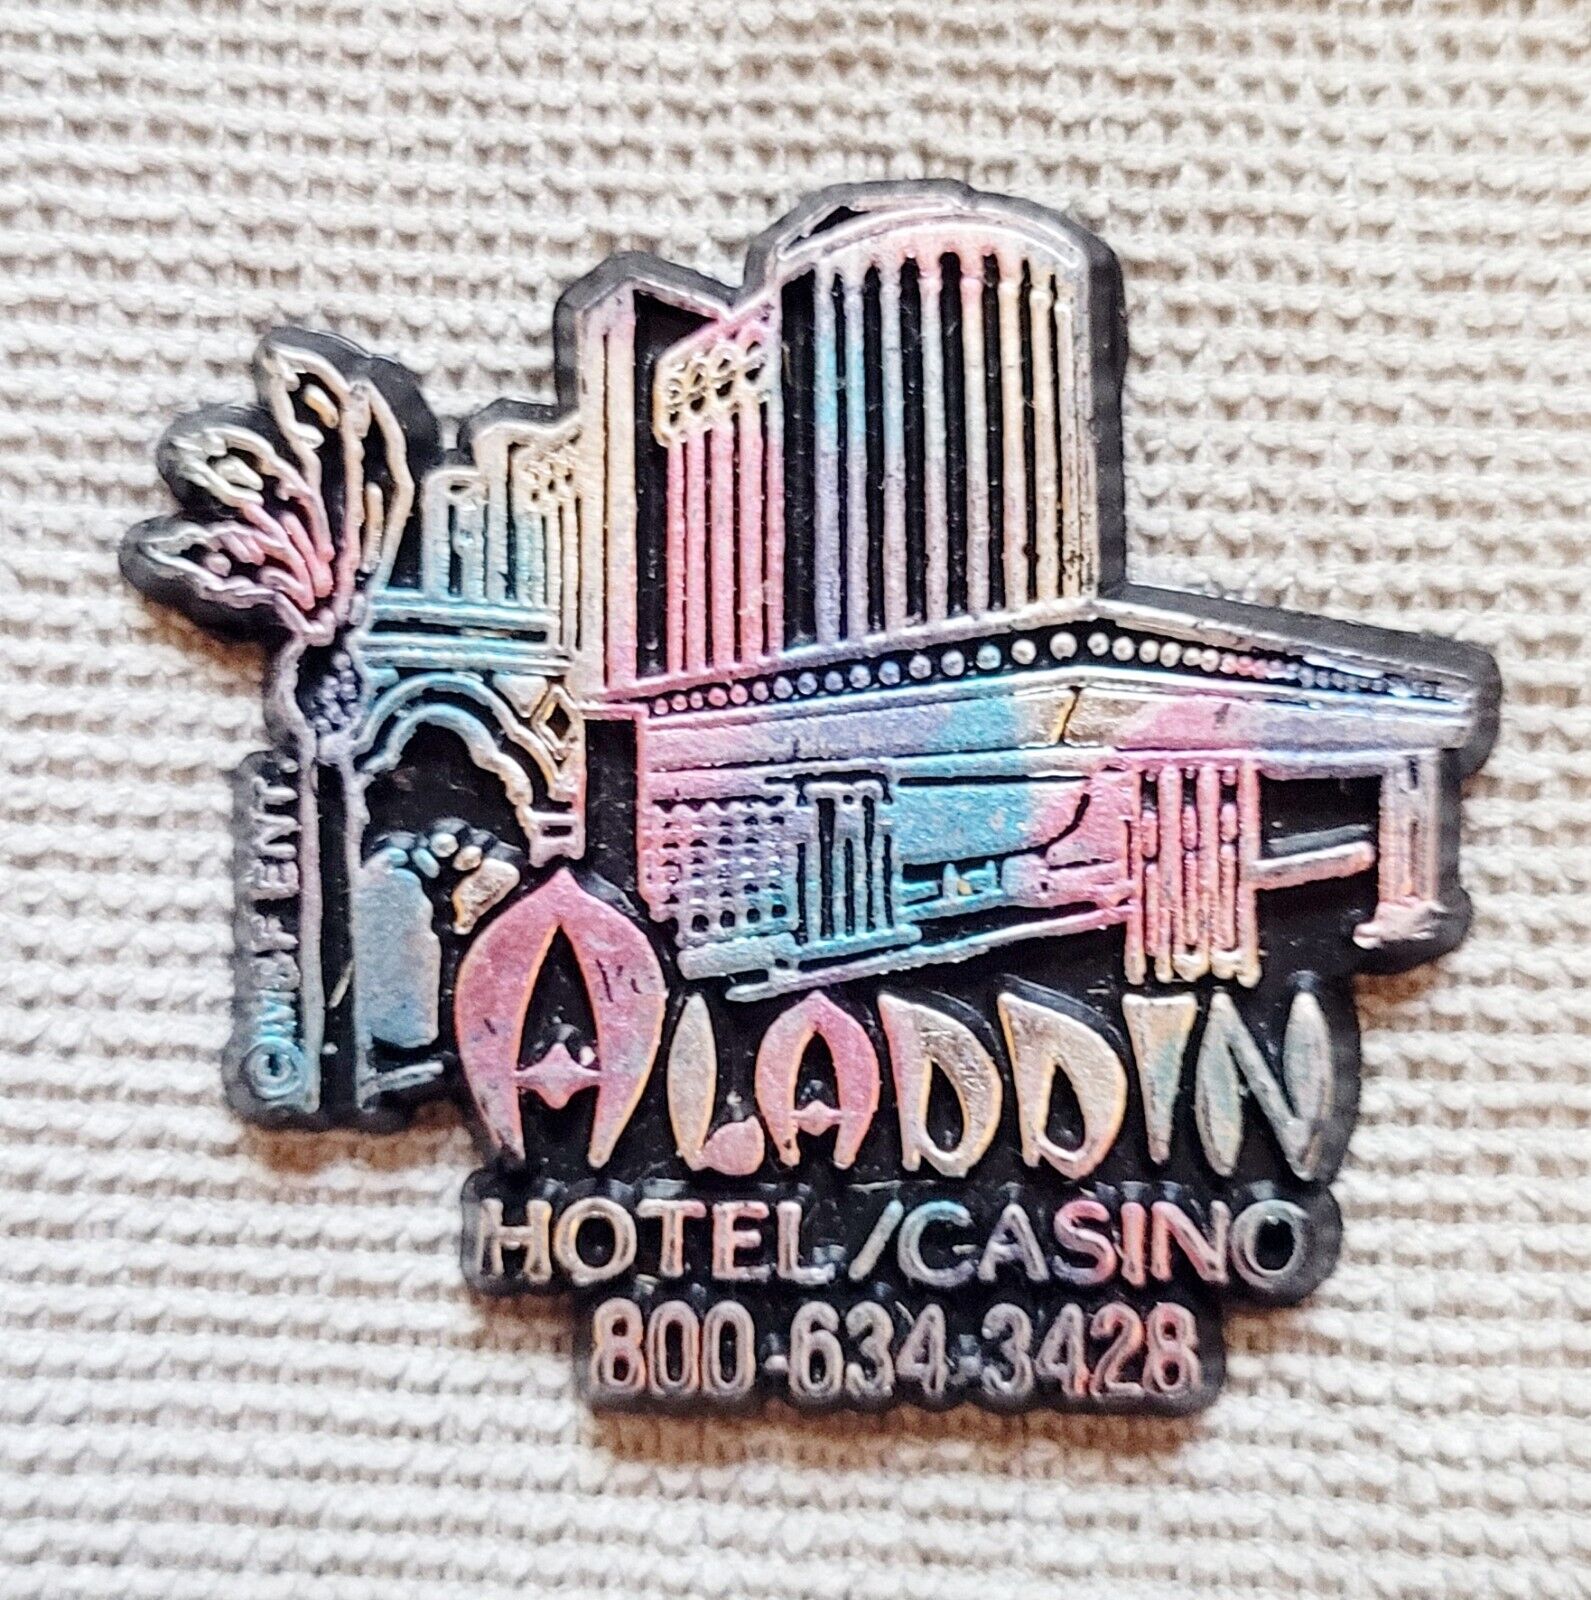 Aladdin Hotel Casino Refrigerator Magnet Souvenir Rubber Novelty 